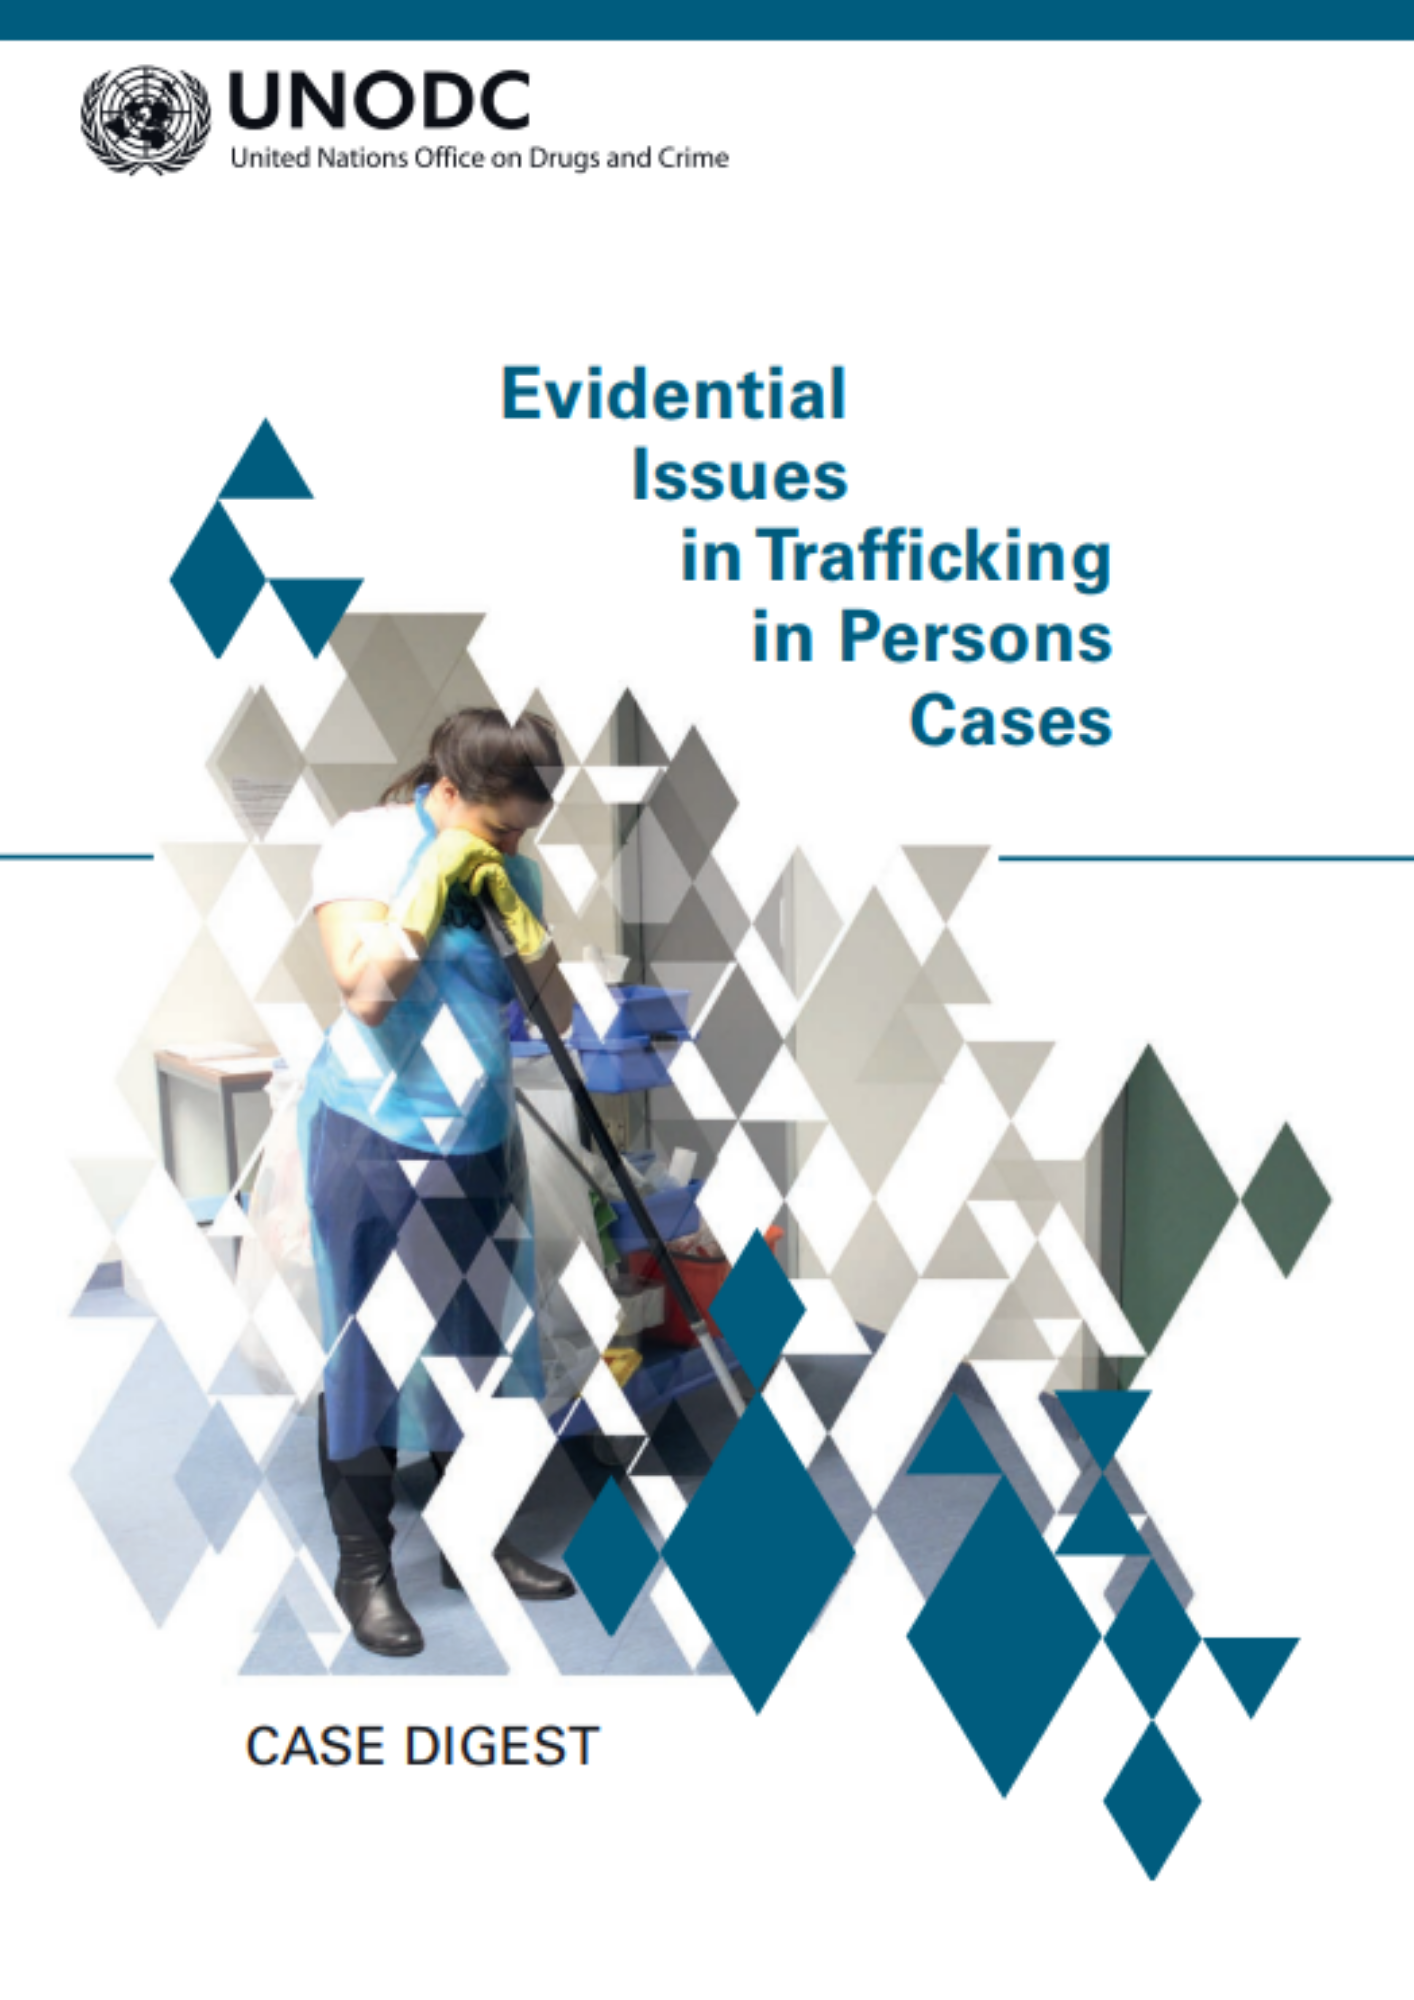 <div style="text-align: center;"><a href="https://www.unodc.org/documents/human-trafficking/2017/Case_Digest_Evidential_Issues_in_Trafficking.pdf">Les preuves dans les affaires de traite des personnes</a></div>